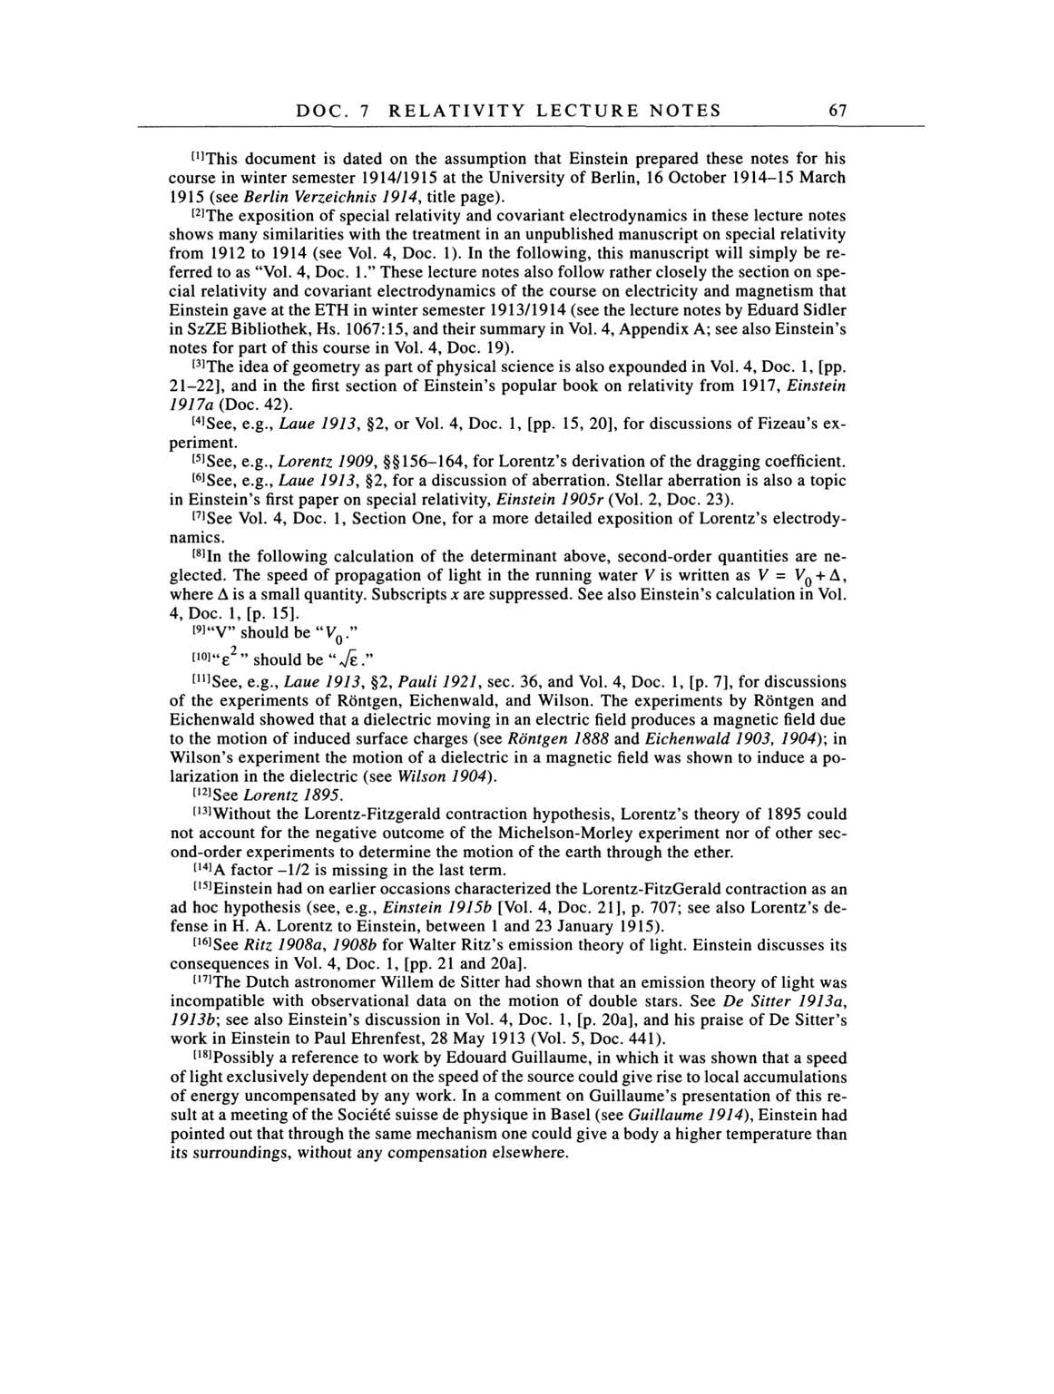 Volume 6: The Berlin Years: Writings, 1914-1917 page 67